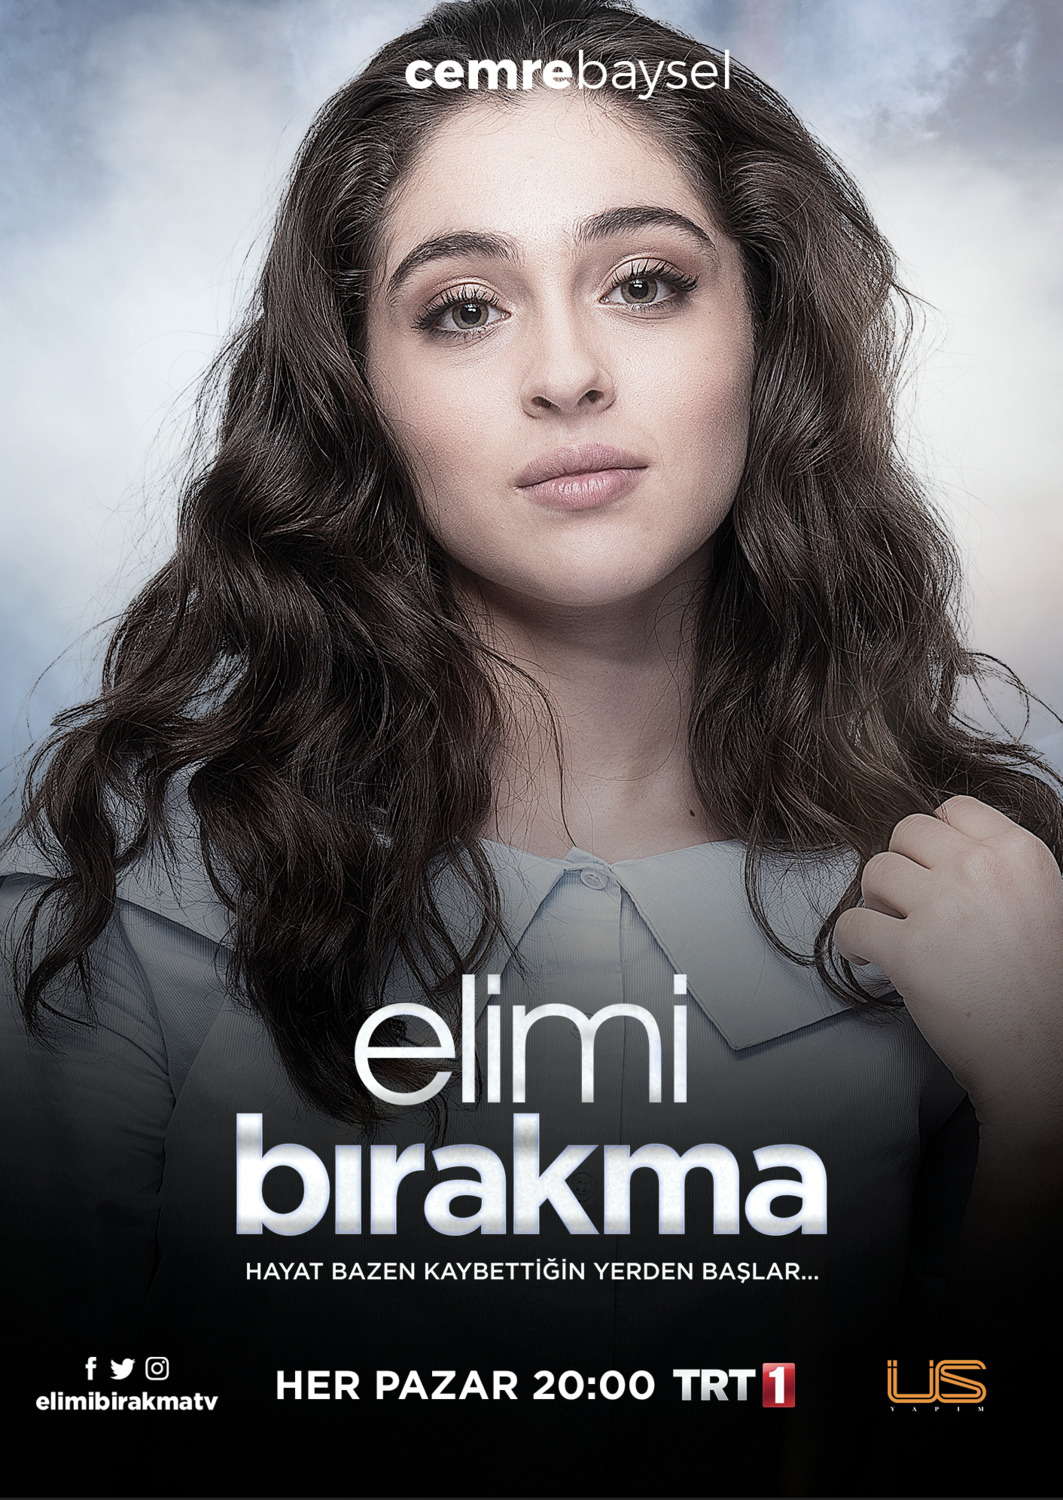 Extra Large TV Poster Image for Elimi birakma (#16 of 20)